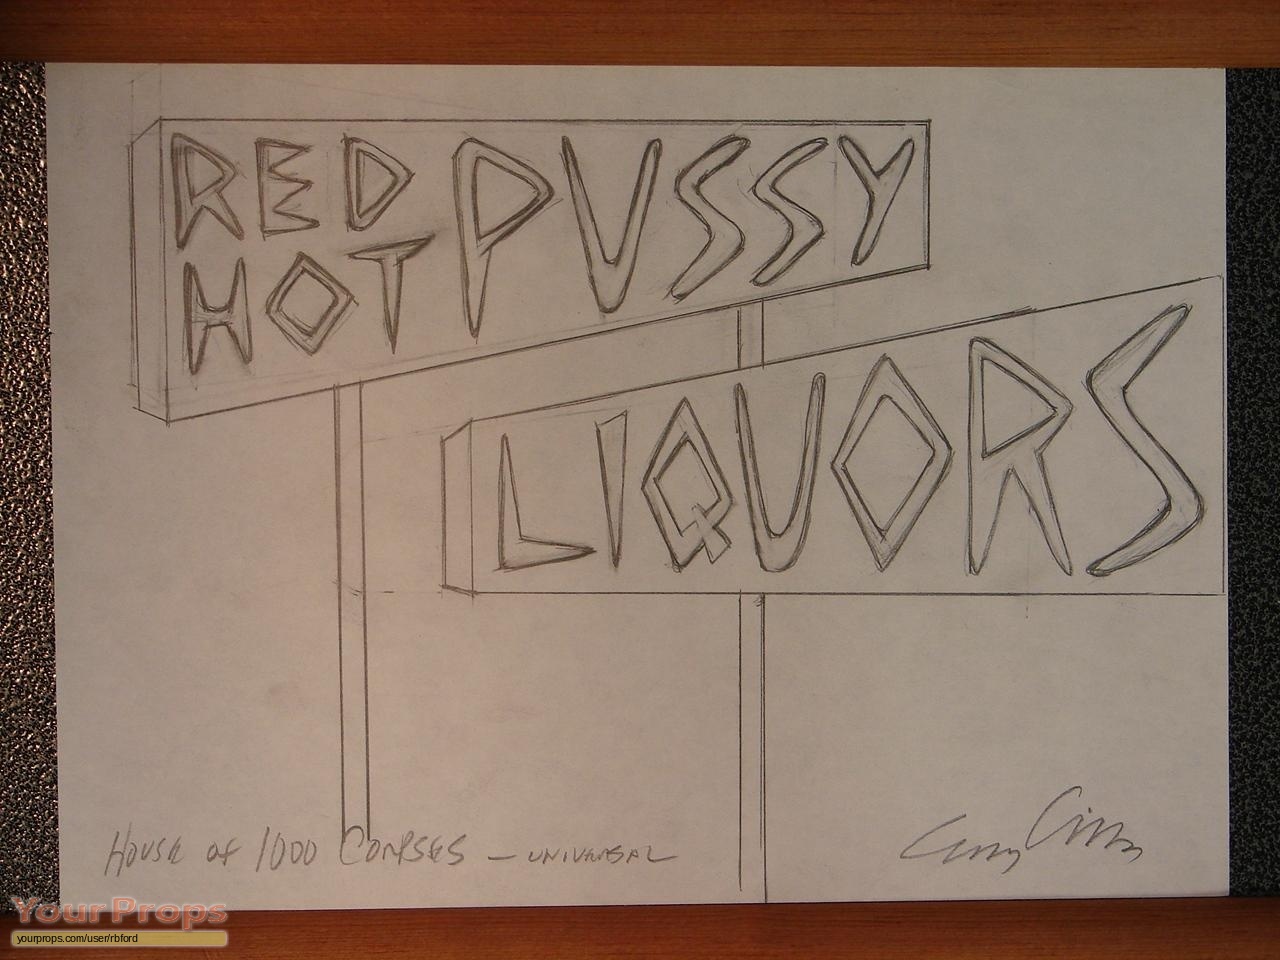 Red hot pussy liquors